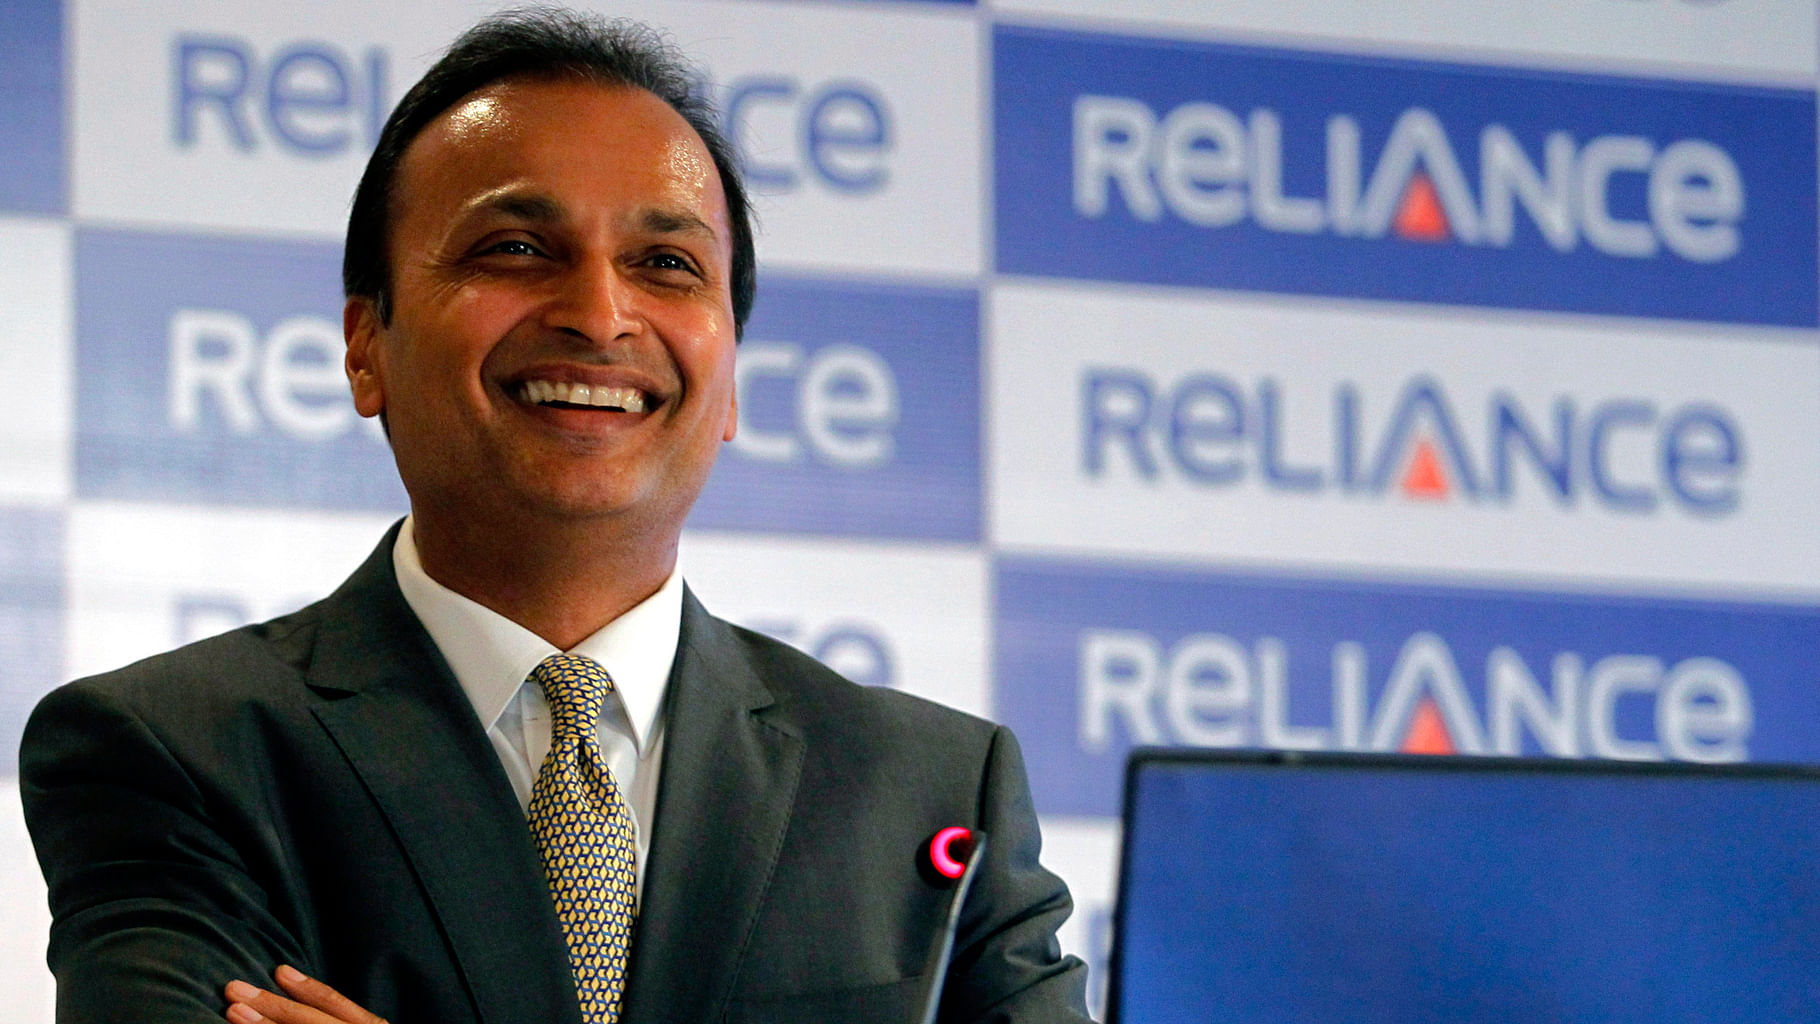 File photo of Anil Ambani, chairman of the Reliance Anil Dhirubhai Ambani Group during a news conference in Mumbai. (Photo: Reuters)&nbsp;